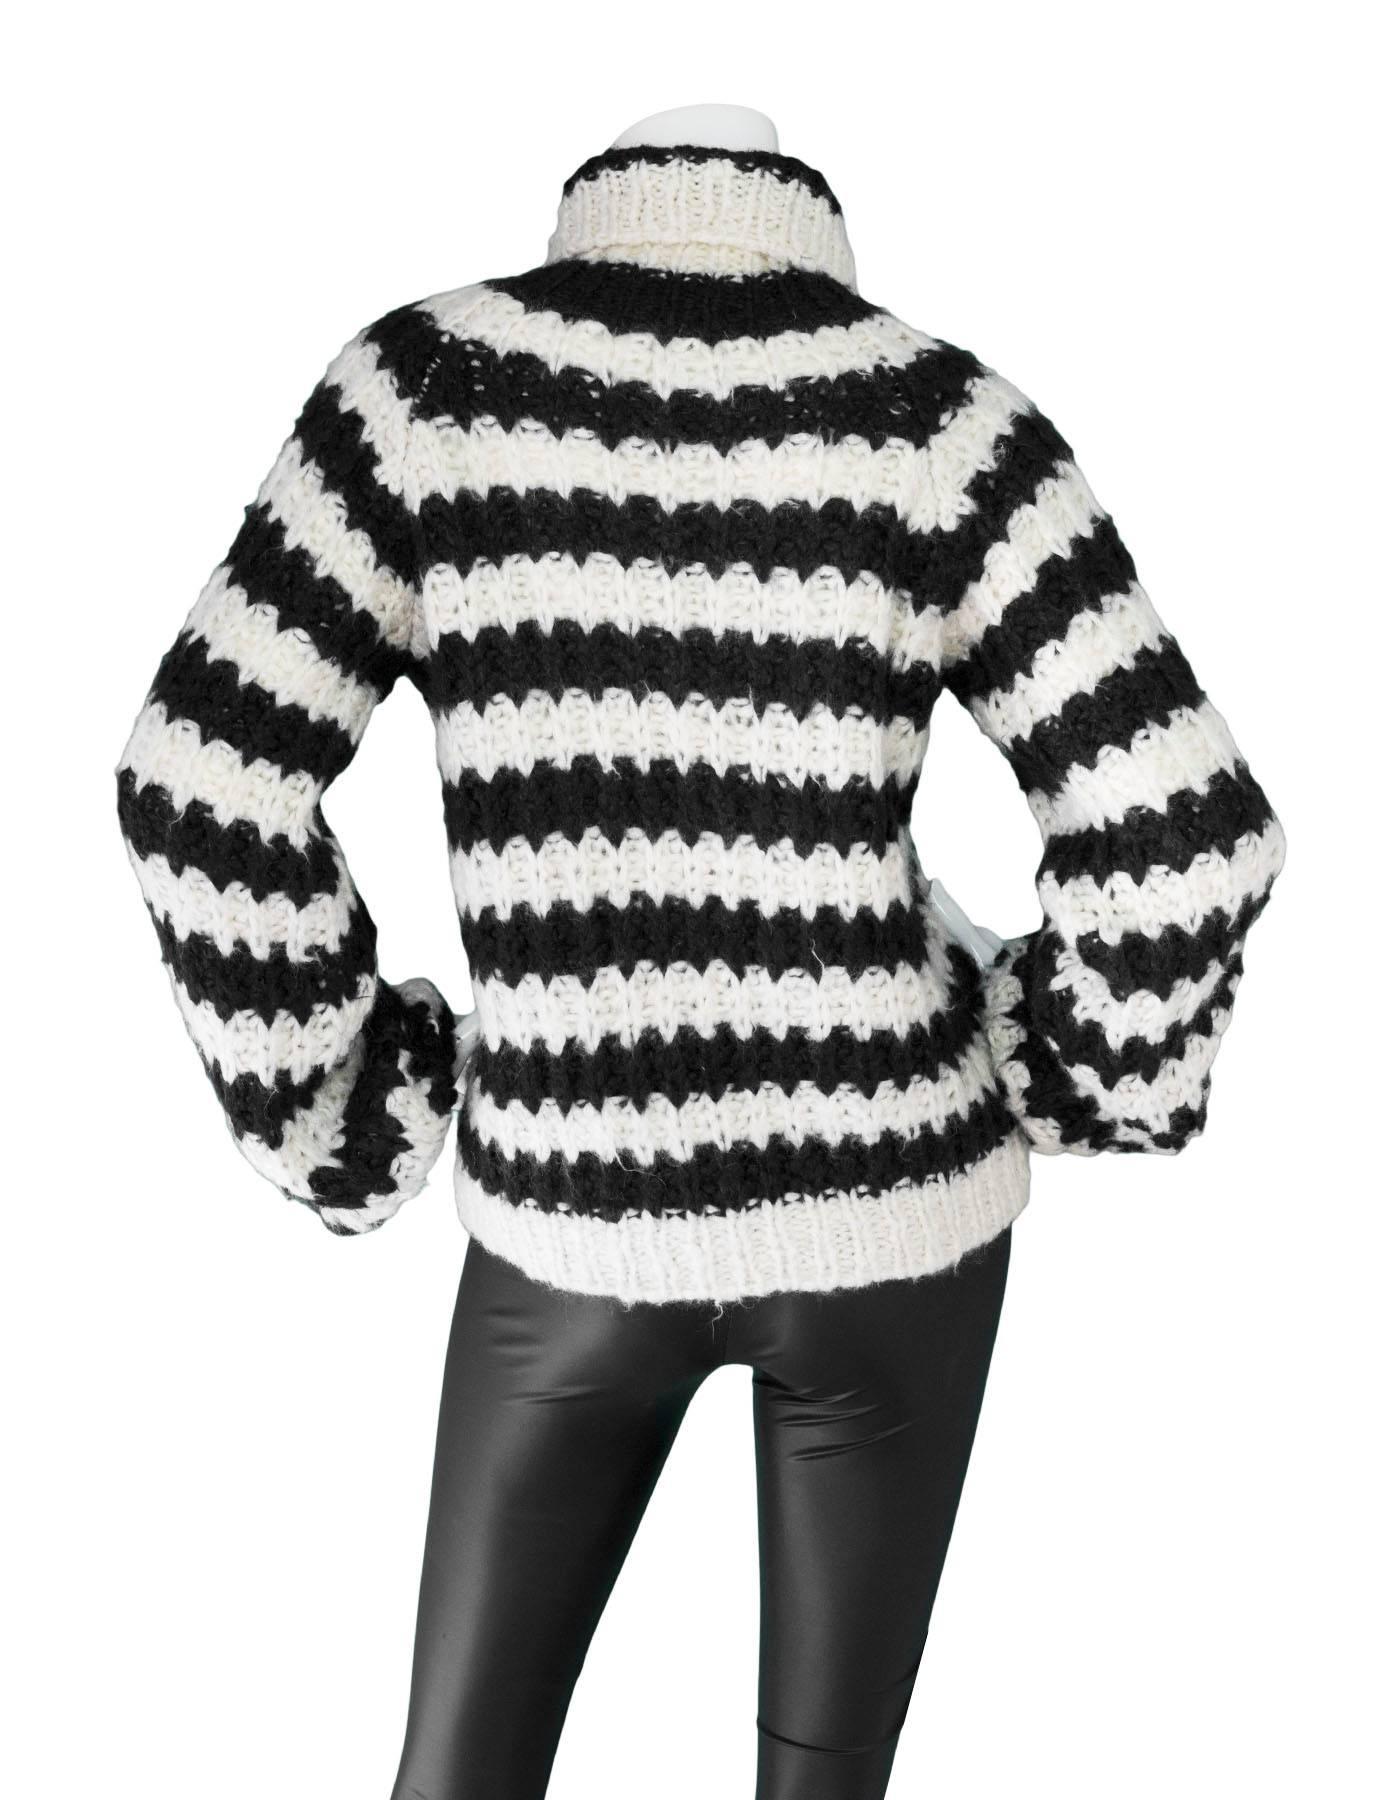 Gray Chloe Cream & Navy Wool Turtleneck Knit Sweater sz S rt. $415